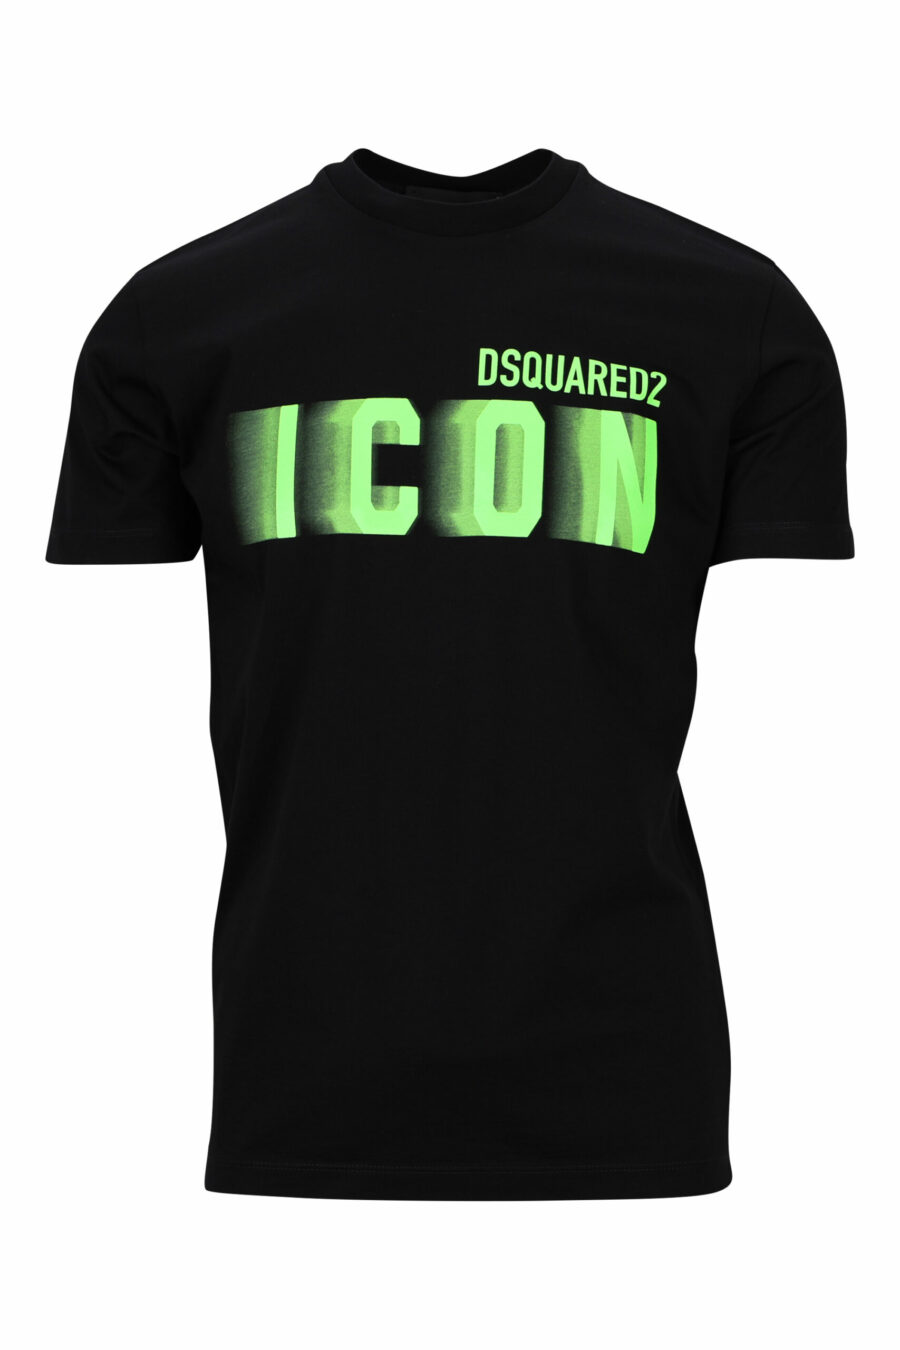 Camiseta negra con maxilogo "icon" verde neon borroso - 8054148359126 scaled